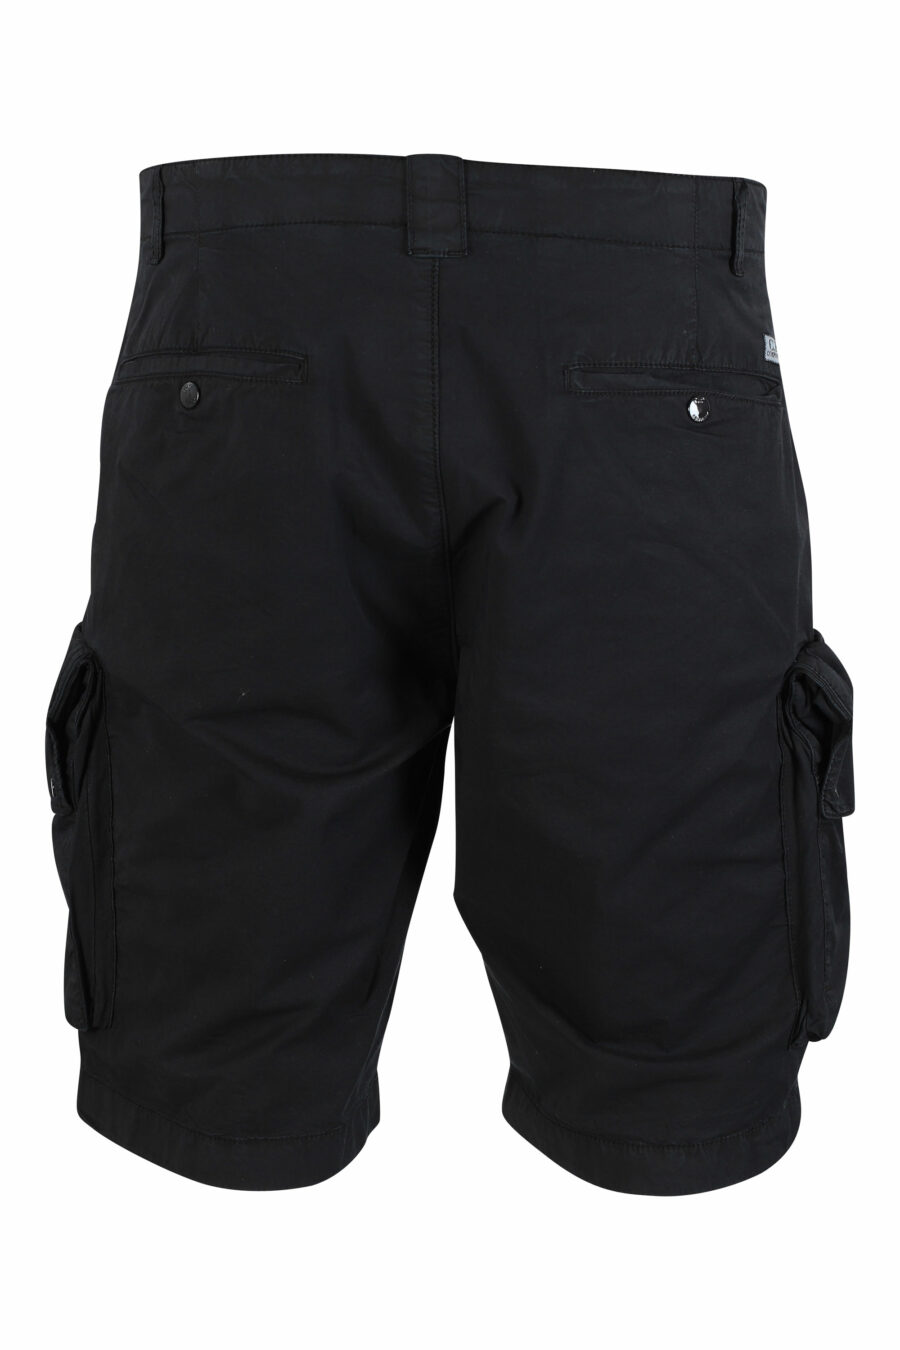 Pantalón corto negro con bolsillos laterales y minilogo circular - IMG 9487